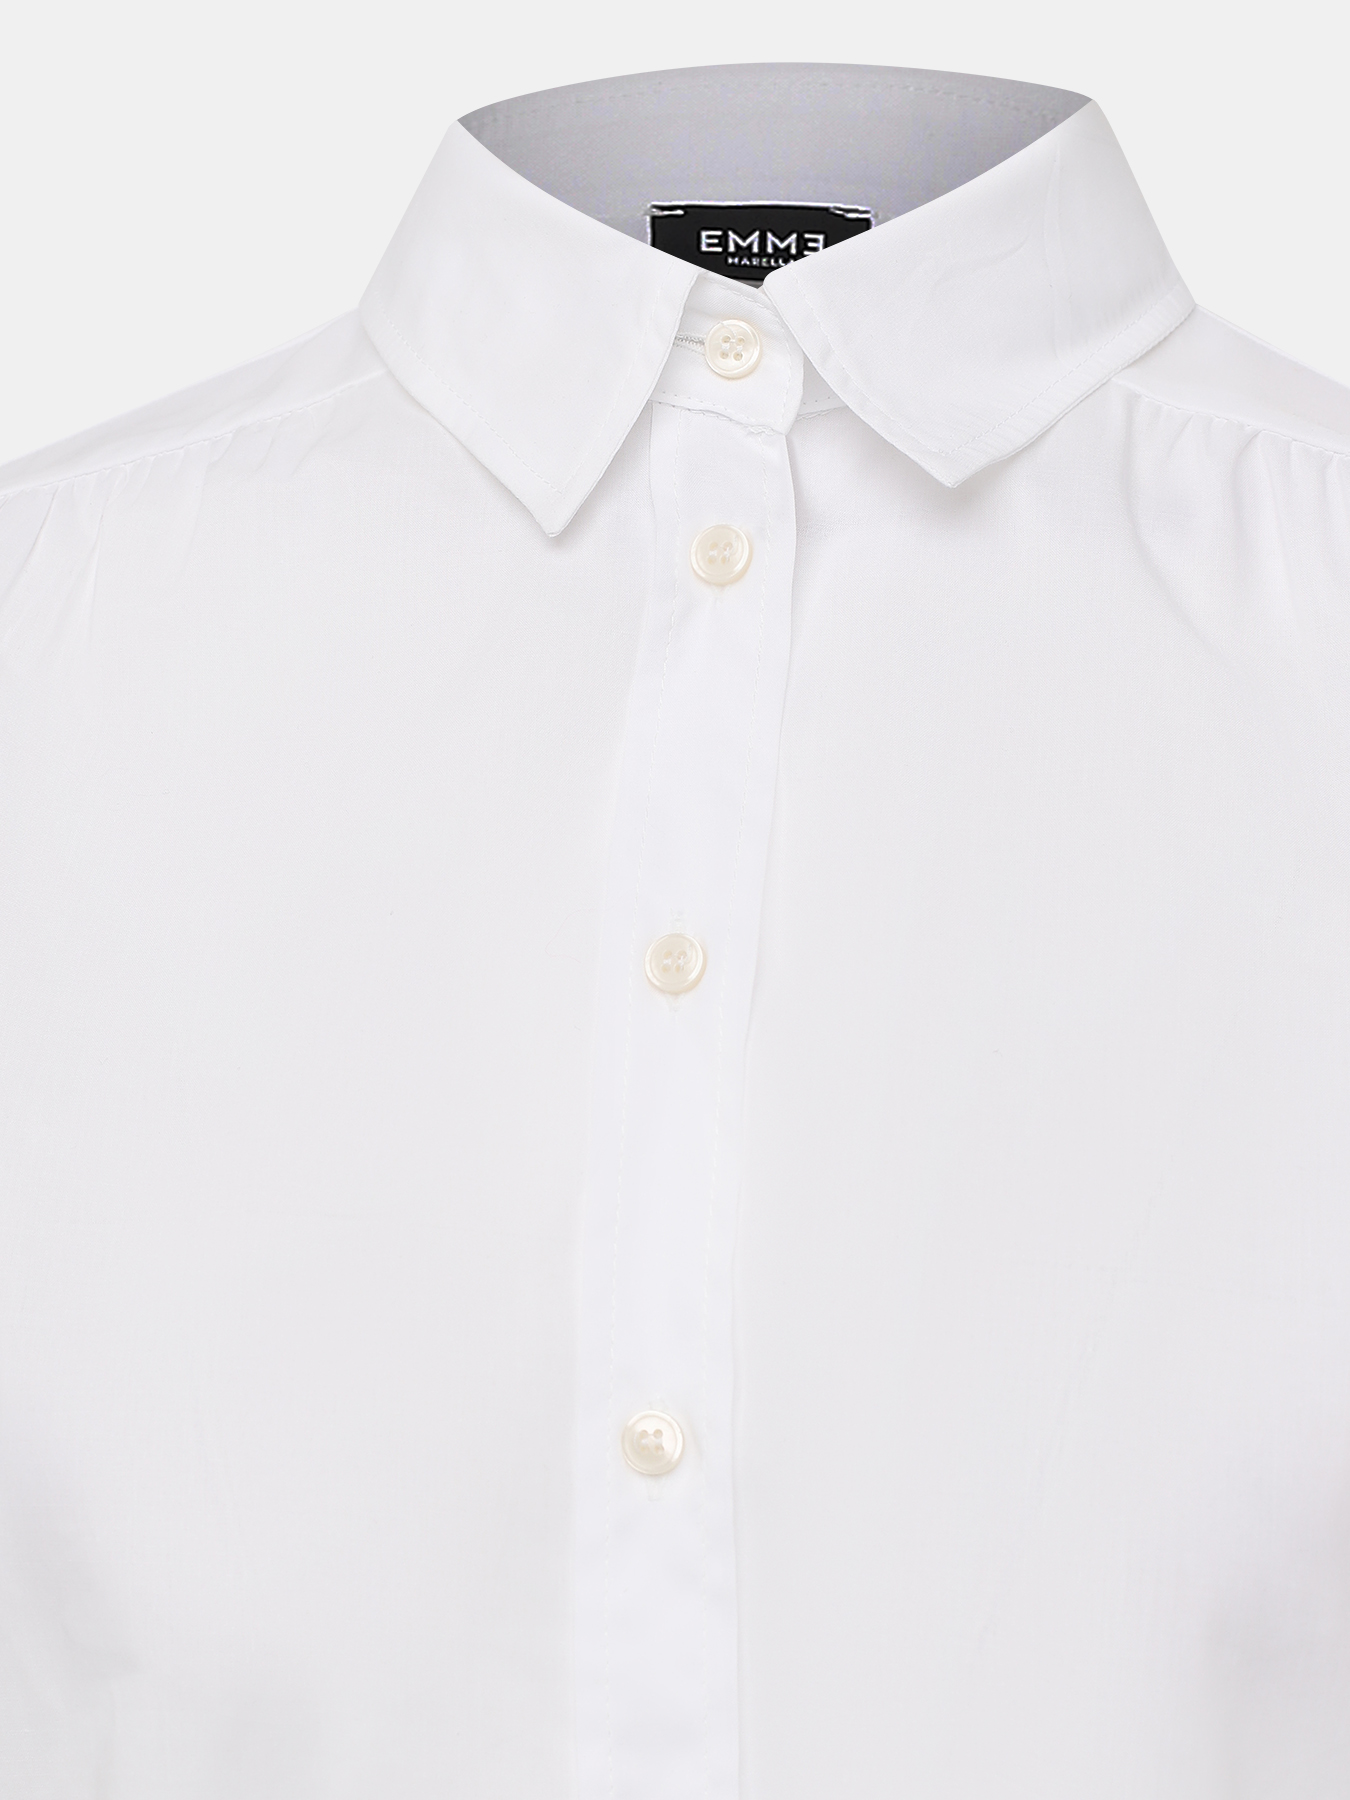 Блузка Fianco Emme Marella 422843-024, цвет белый, размер 48 - фото 3